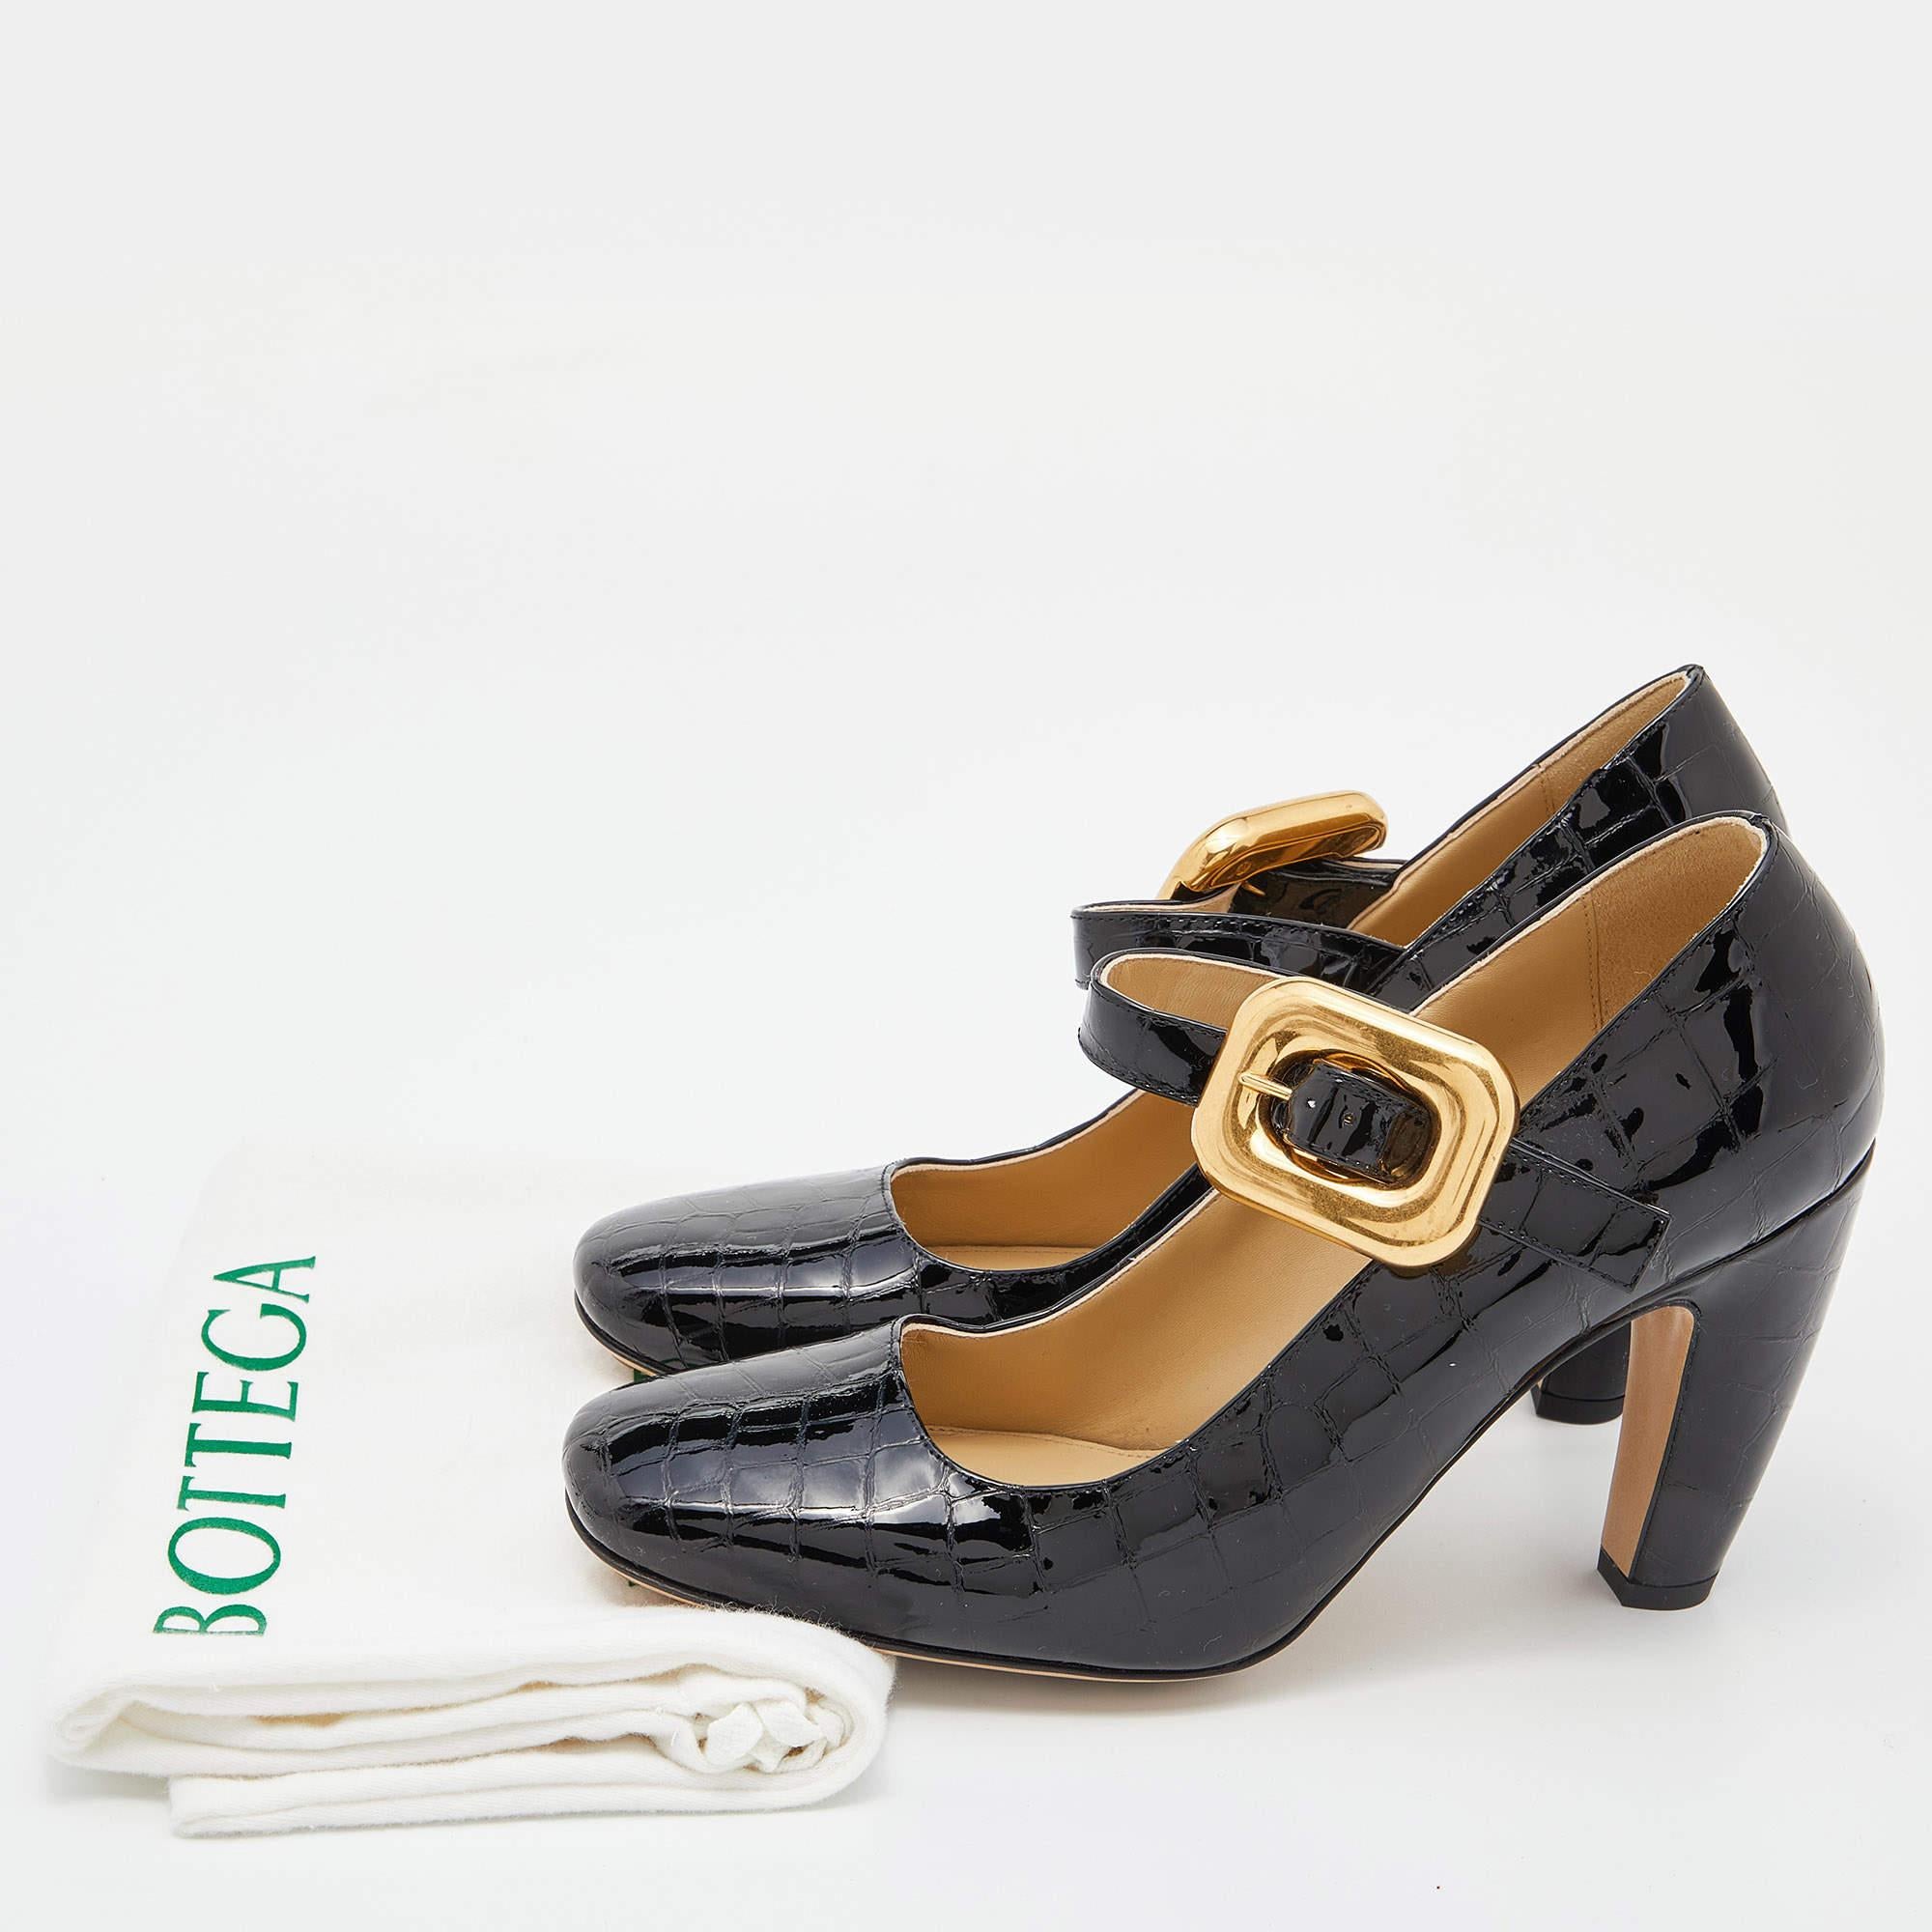 Bottega Veneta Black Croc Embossed Patent Leather Block Heel Pumps Size 39 3